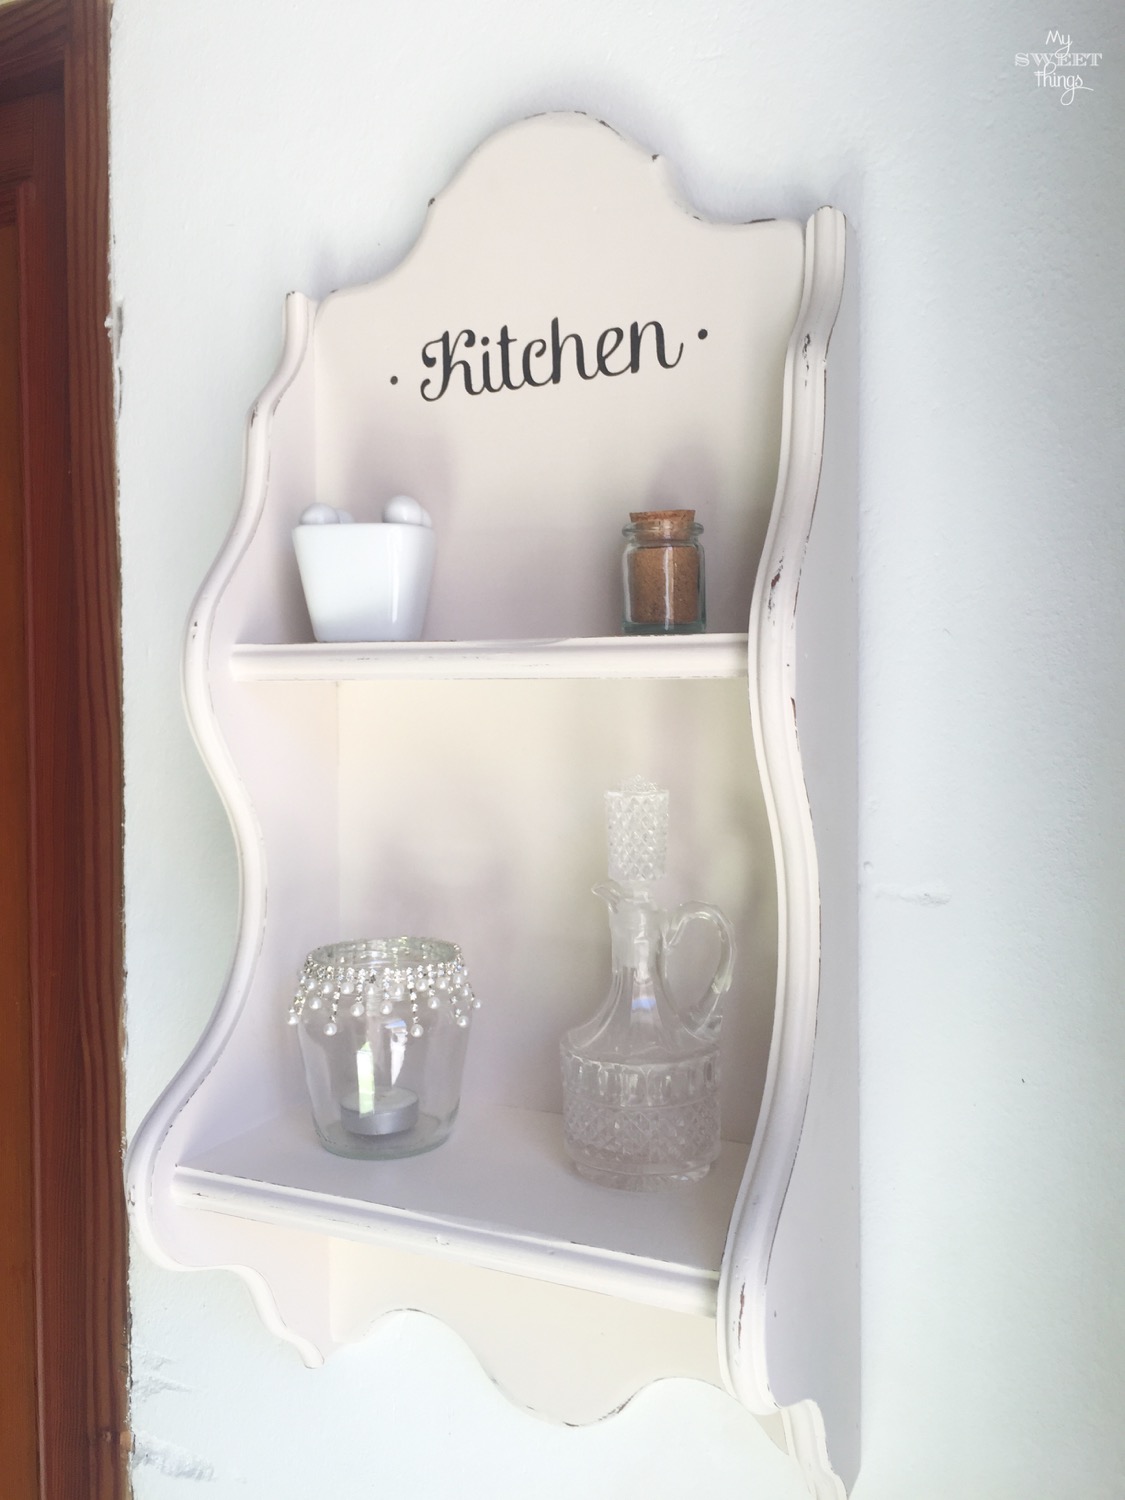 Shabby kitchen rack · Painted off-white · Via www.sweethings.net